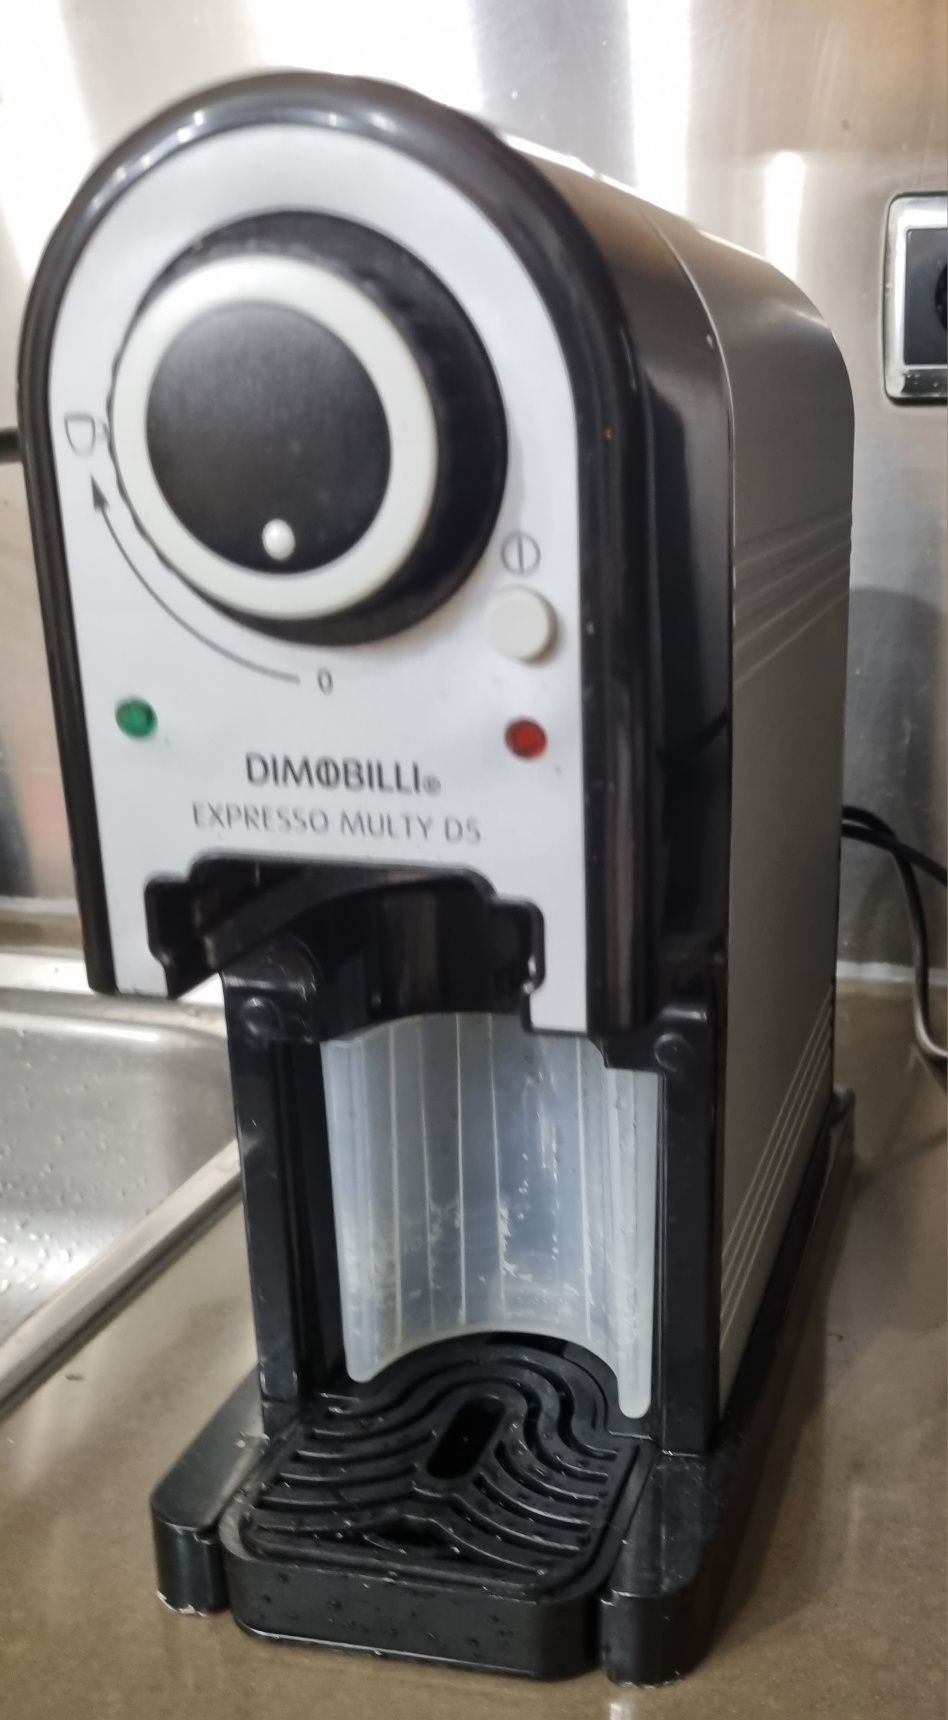 Máquina de Café Dimobilli D5